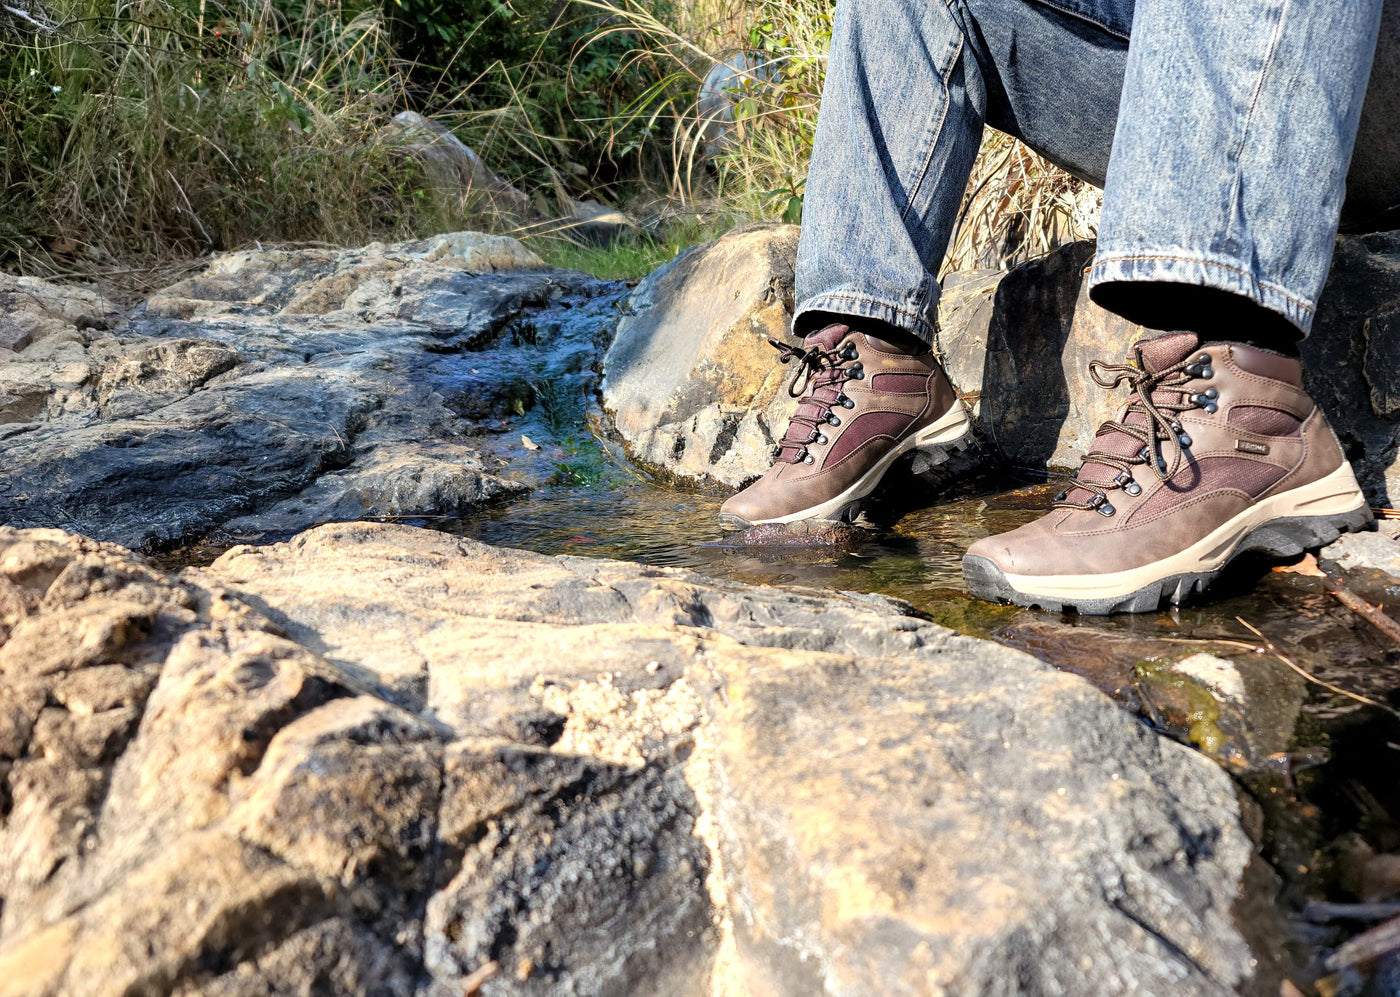 CC-Los Men's Waterproof Hiking Boots Work Boots C21